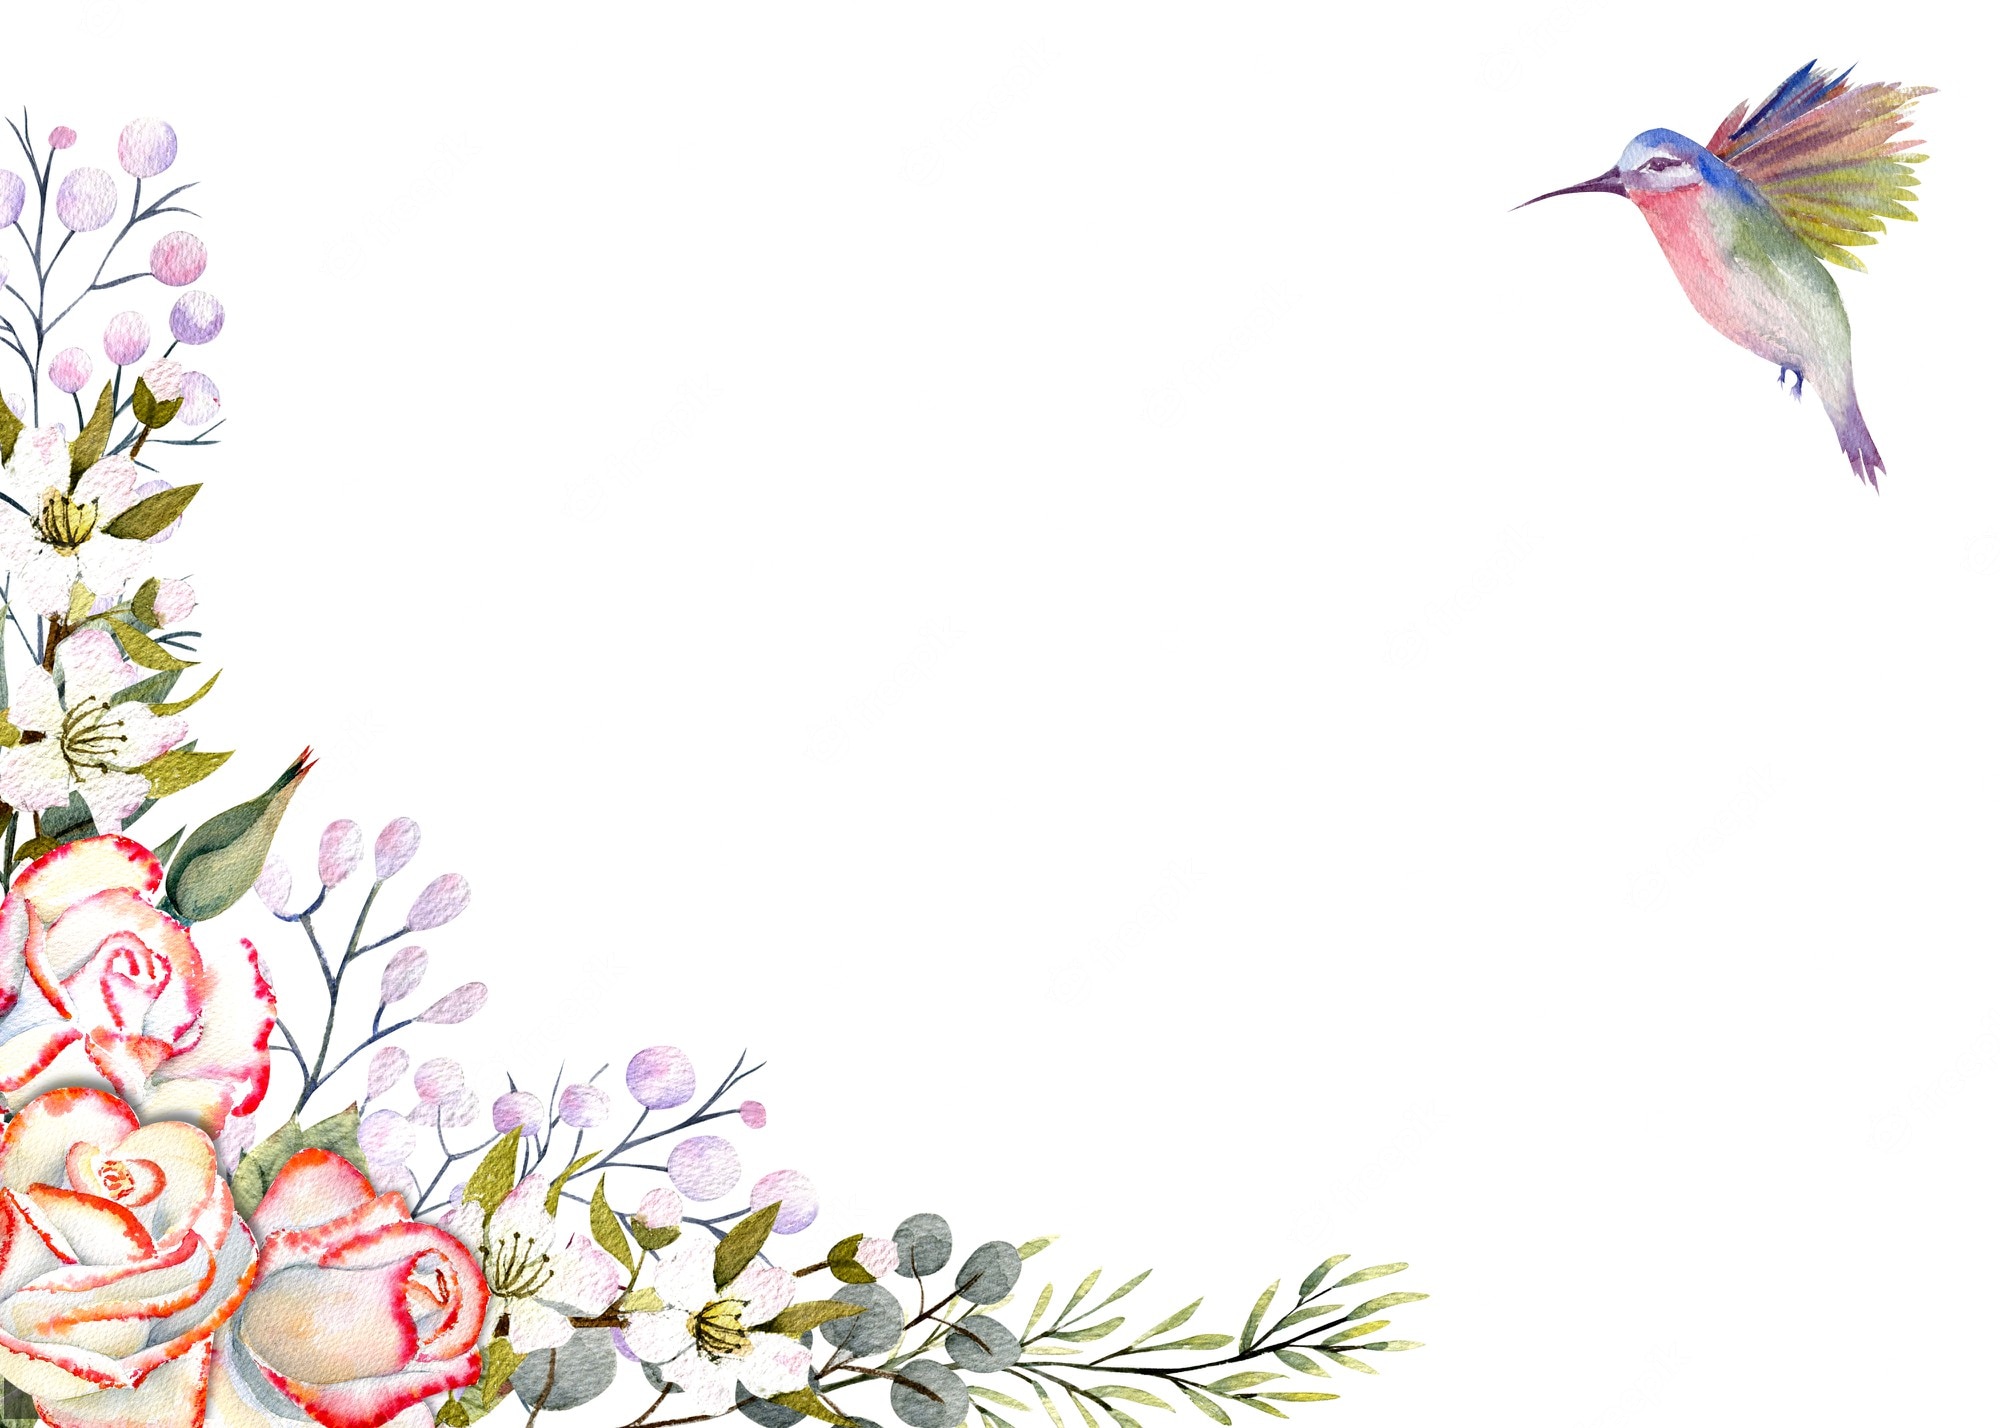 Watercolor Hummingbird Images Wallpapers